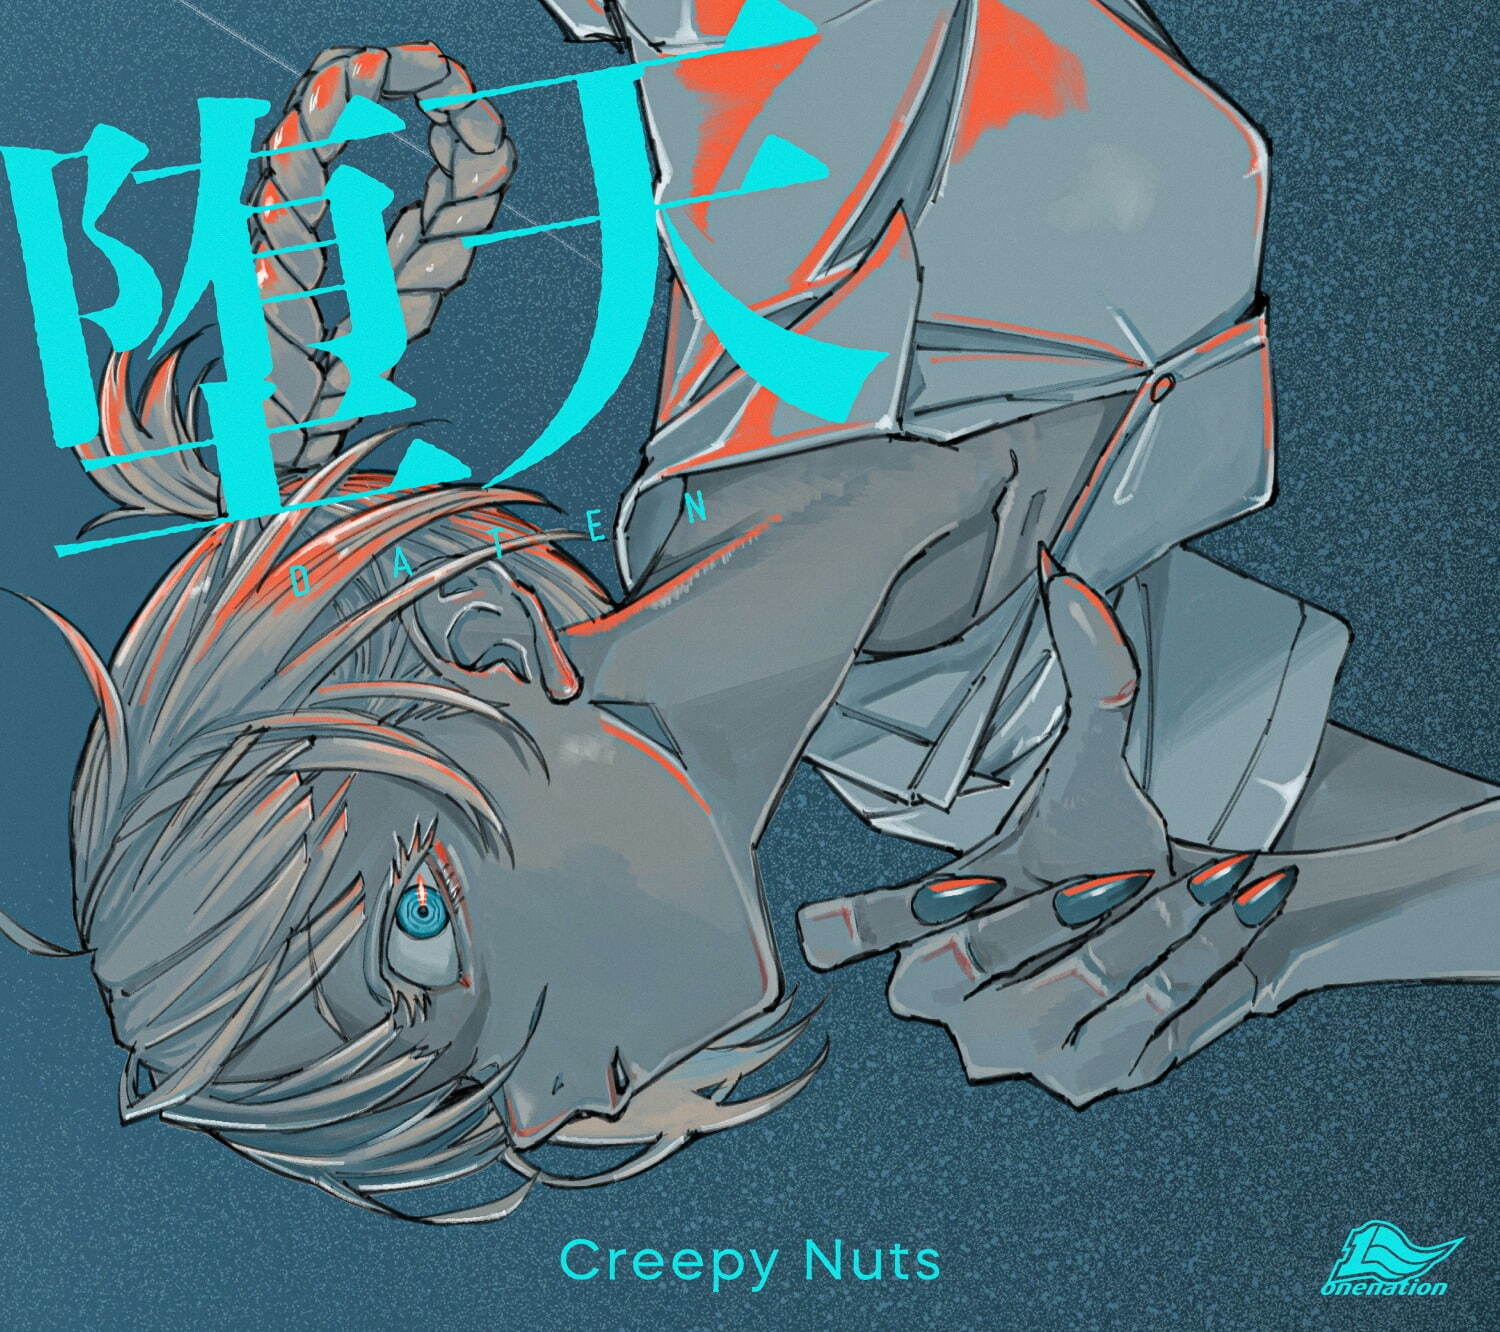 Creepy Nuts 最新シングル『堕天』期間生産限定盤 2,200円